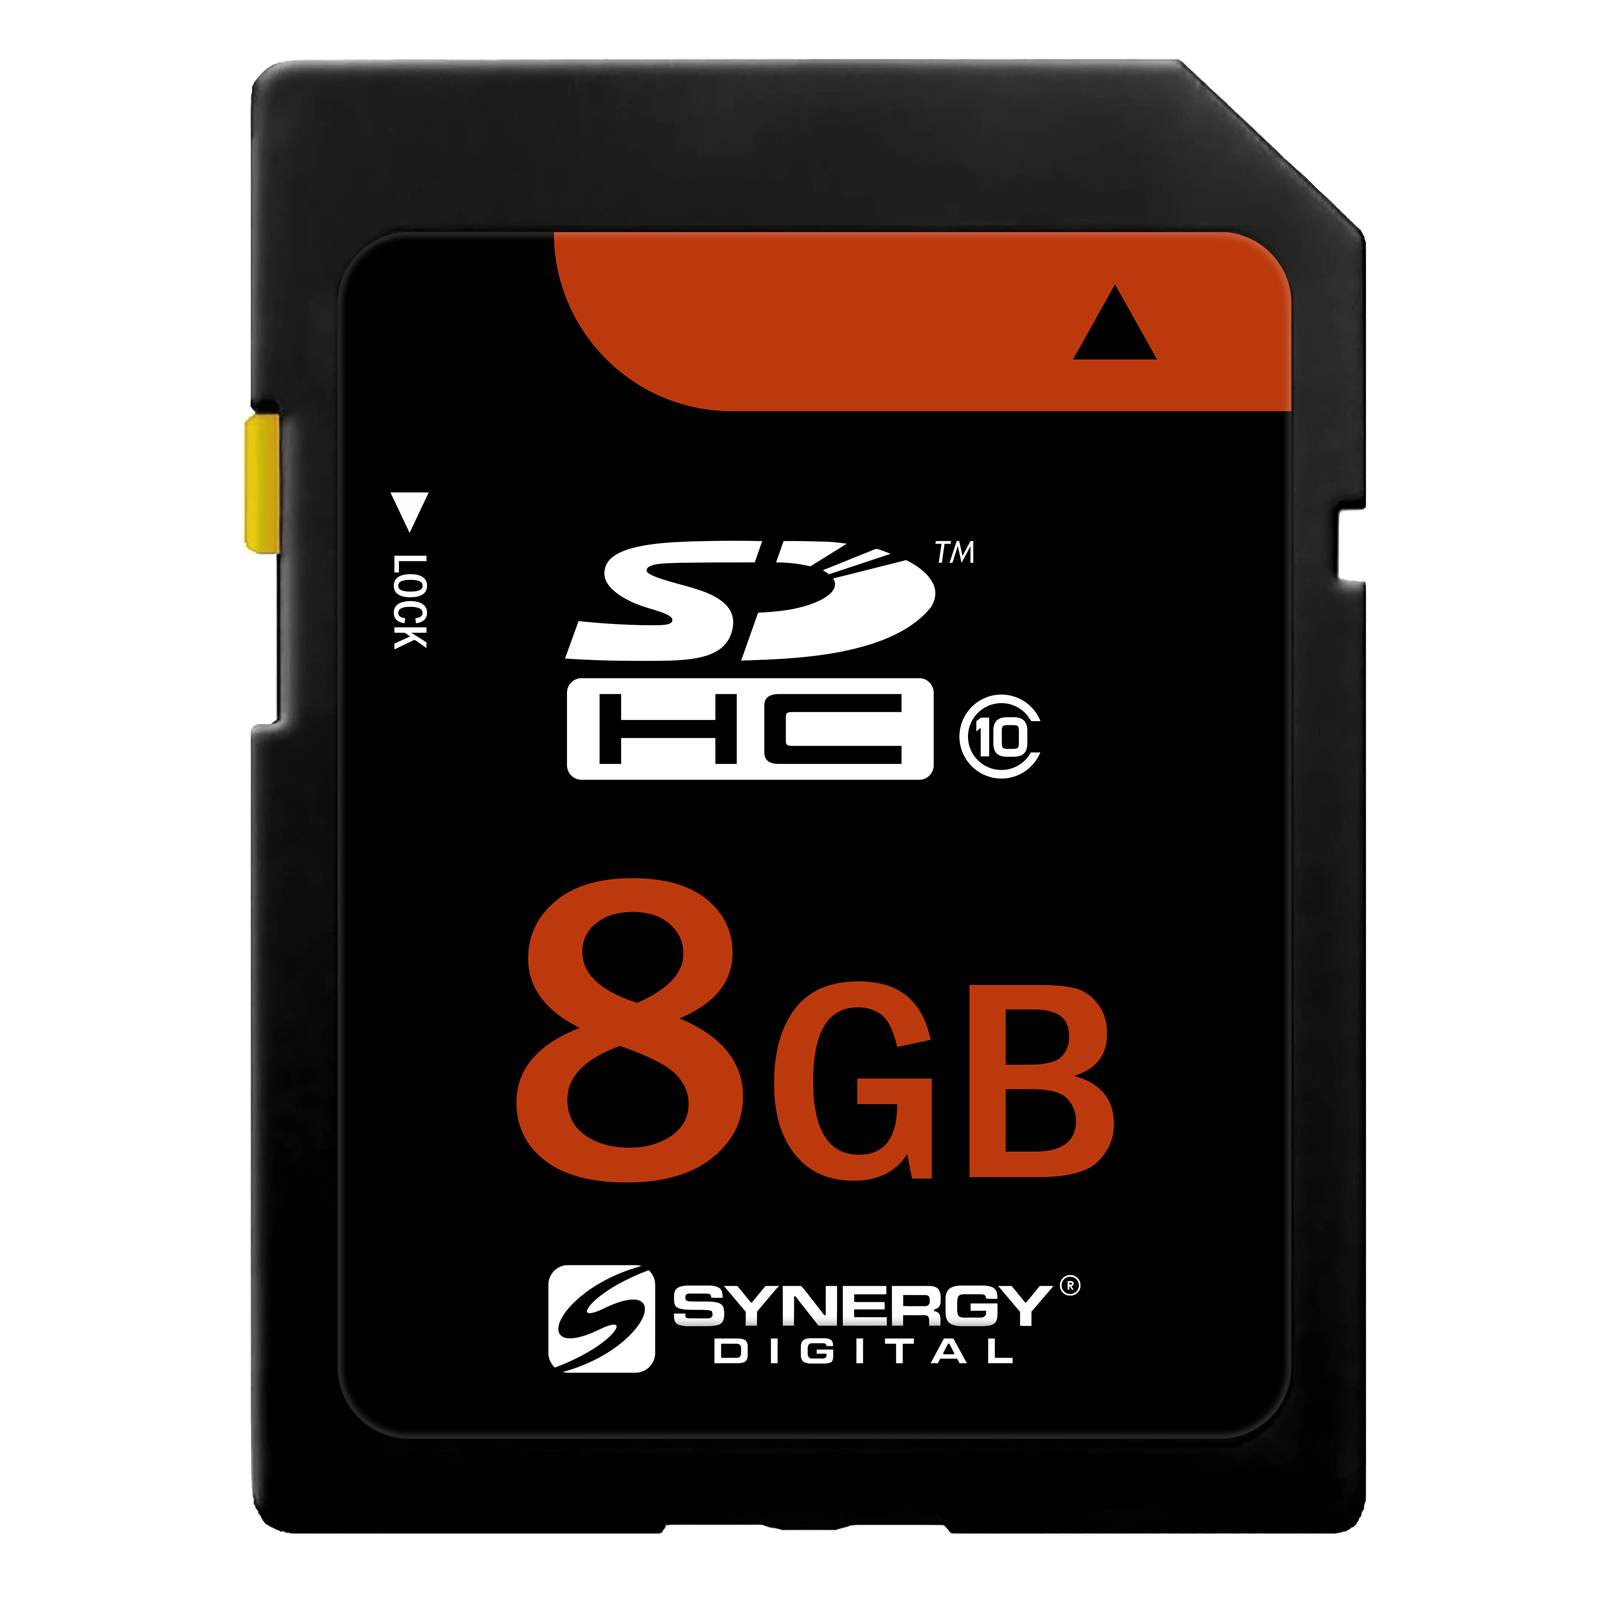 8GB Secure Digital High Capacity (SDHC) Memory Card